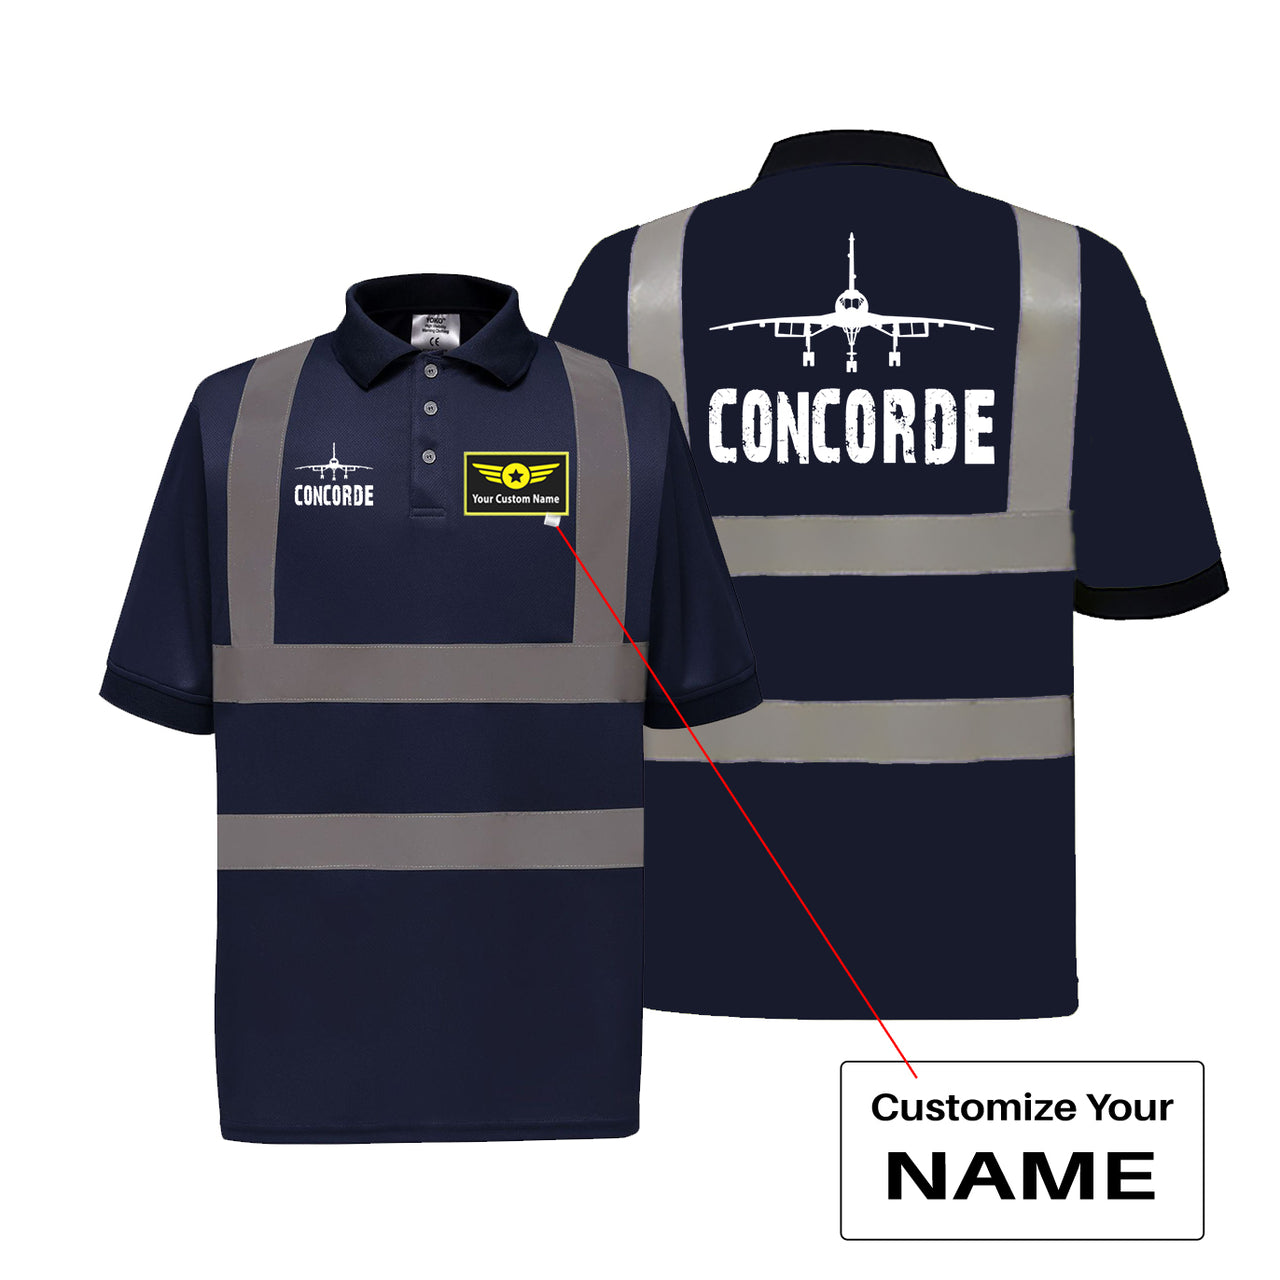 Concorde & Plane Designed Reflective Polo T-Shirts